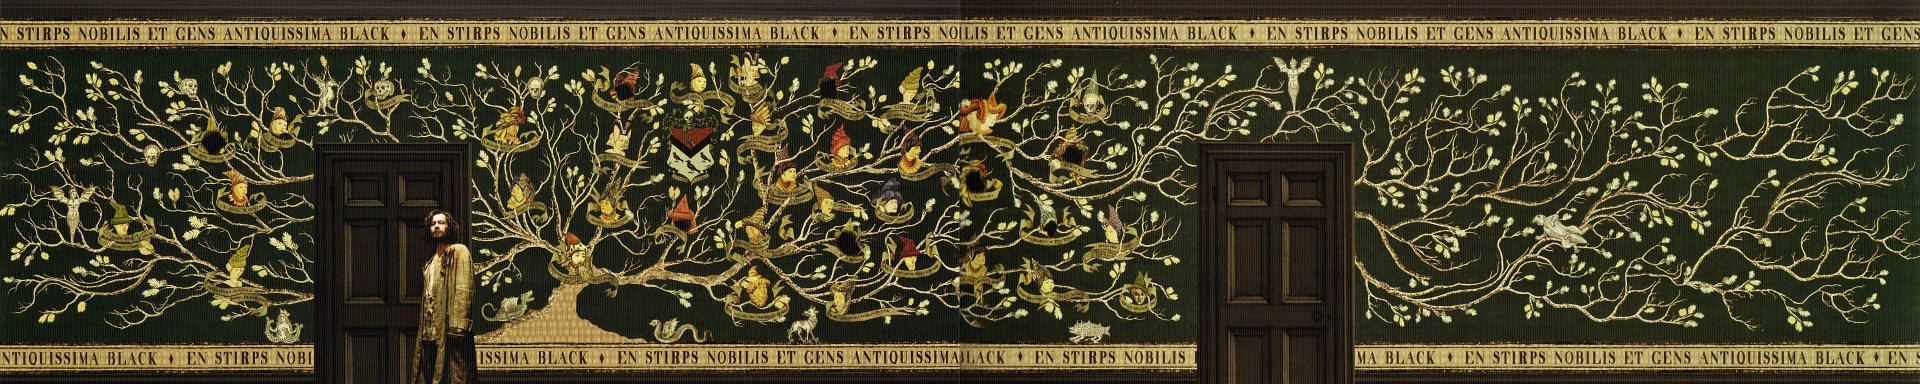 The Black family tapestry (Image via Harry Potter wiki)